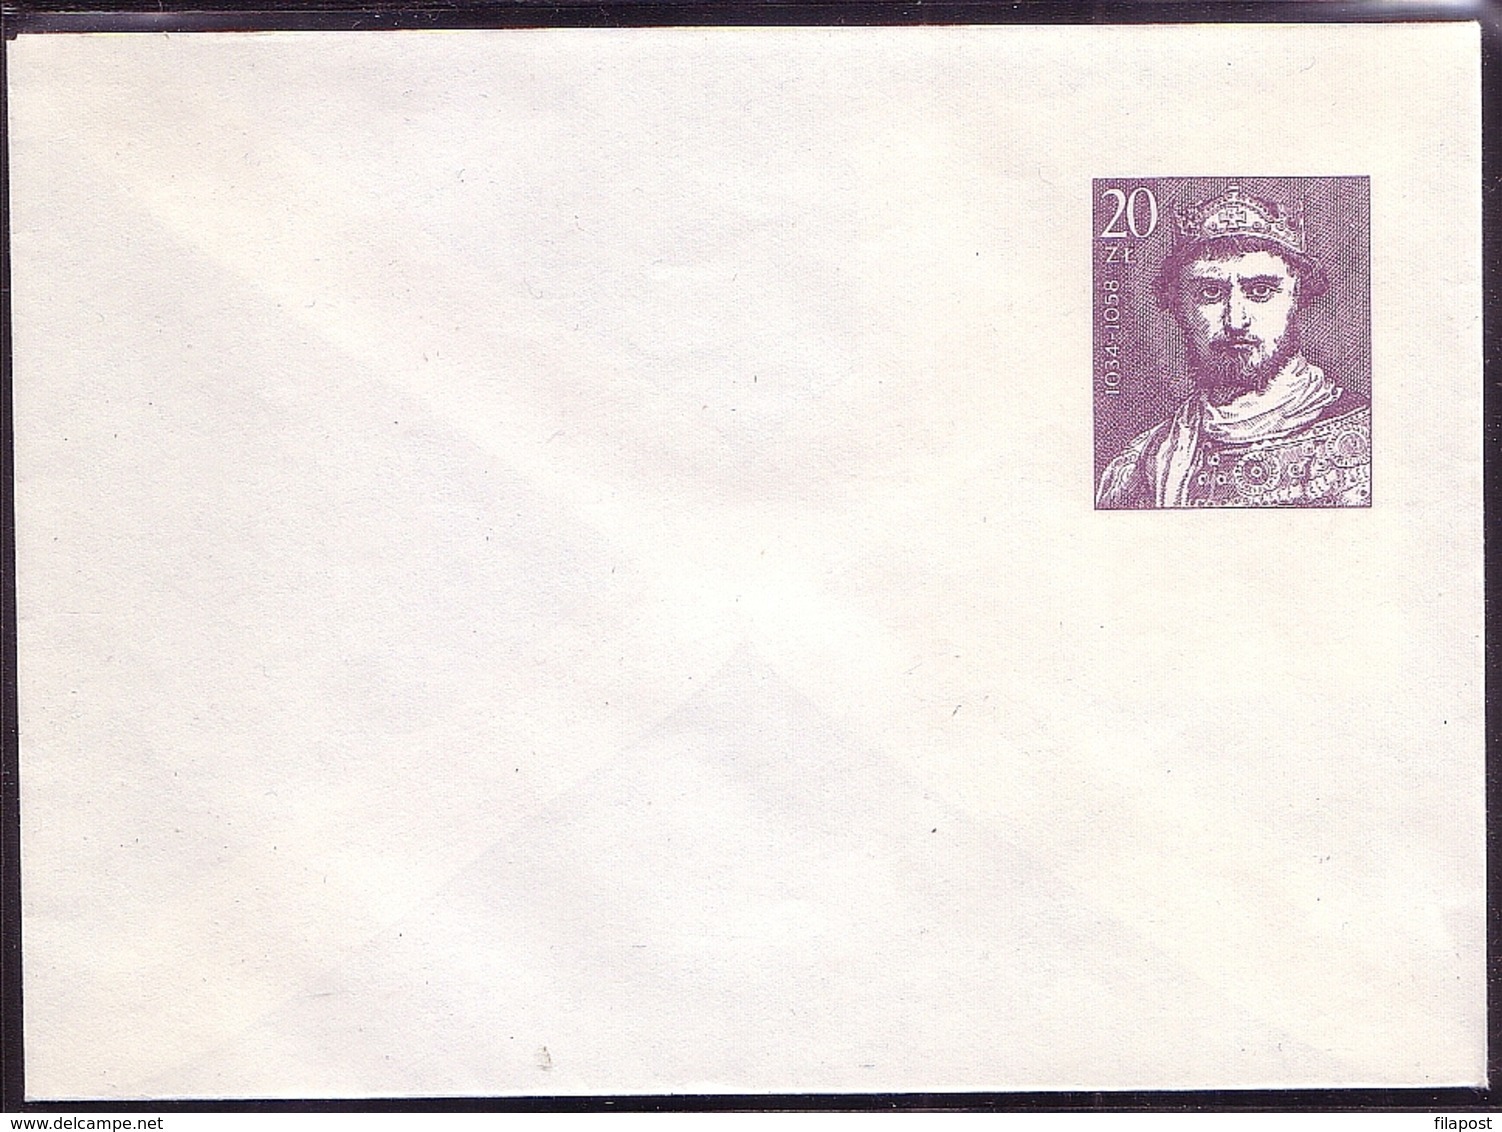 Poland 1988  Fi Ck 85 Error On The Stamp. No Olive Color Mint. King K. Odnowiciel Fotoatest Wysocki PZF - Variétés & Curiosités